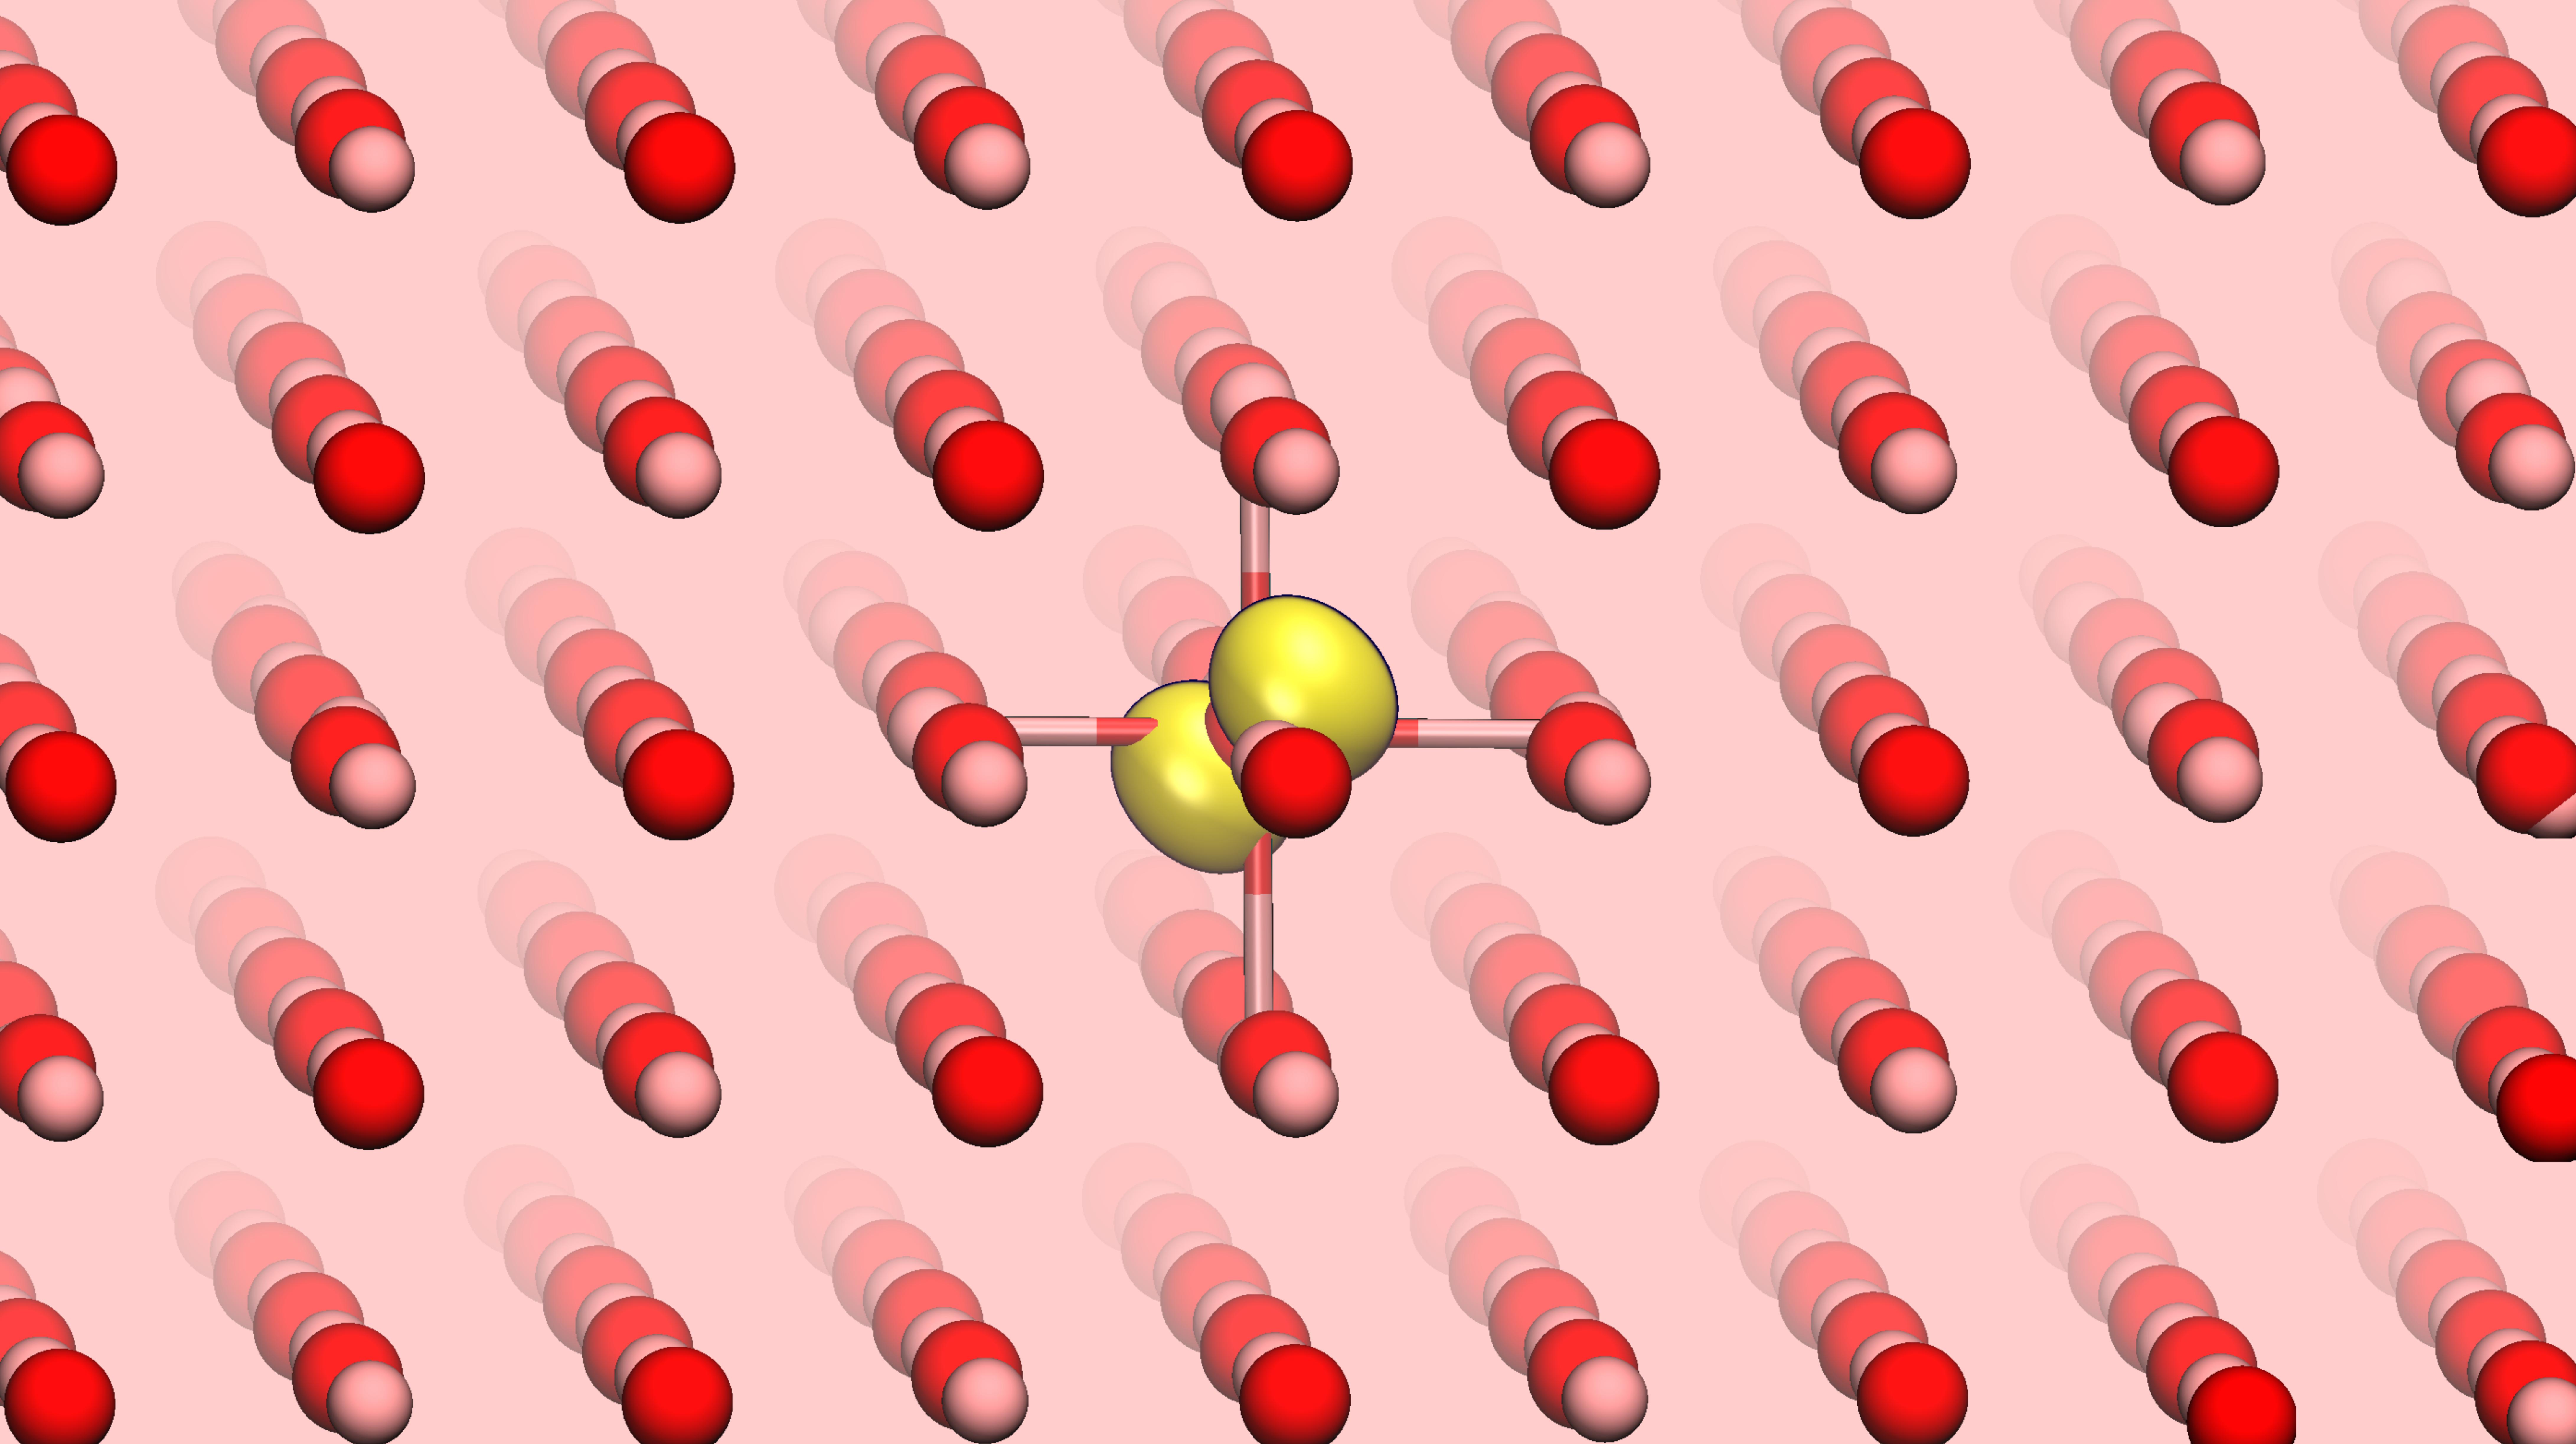 A polaron forming in magnesium oxide atoms